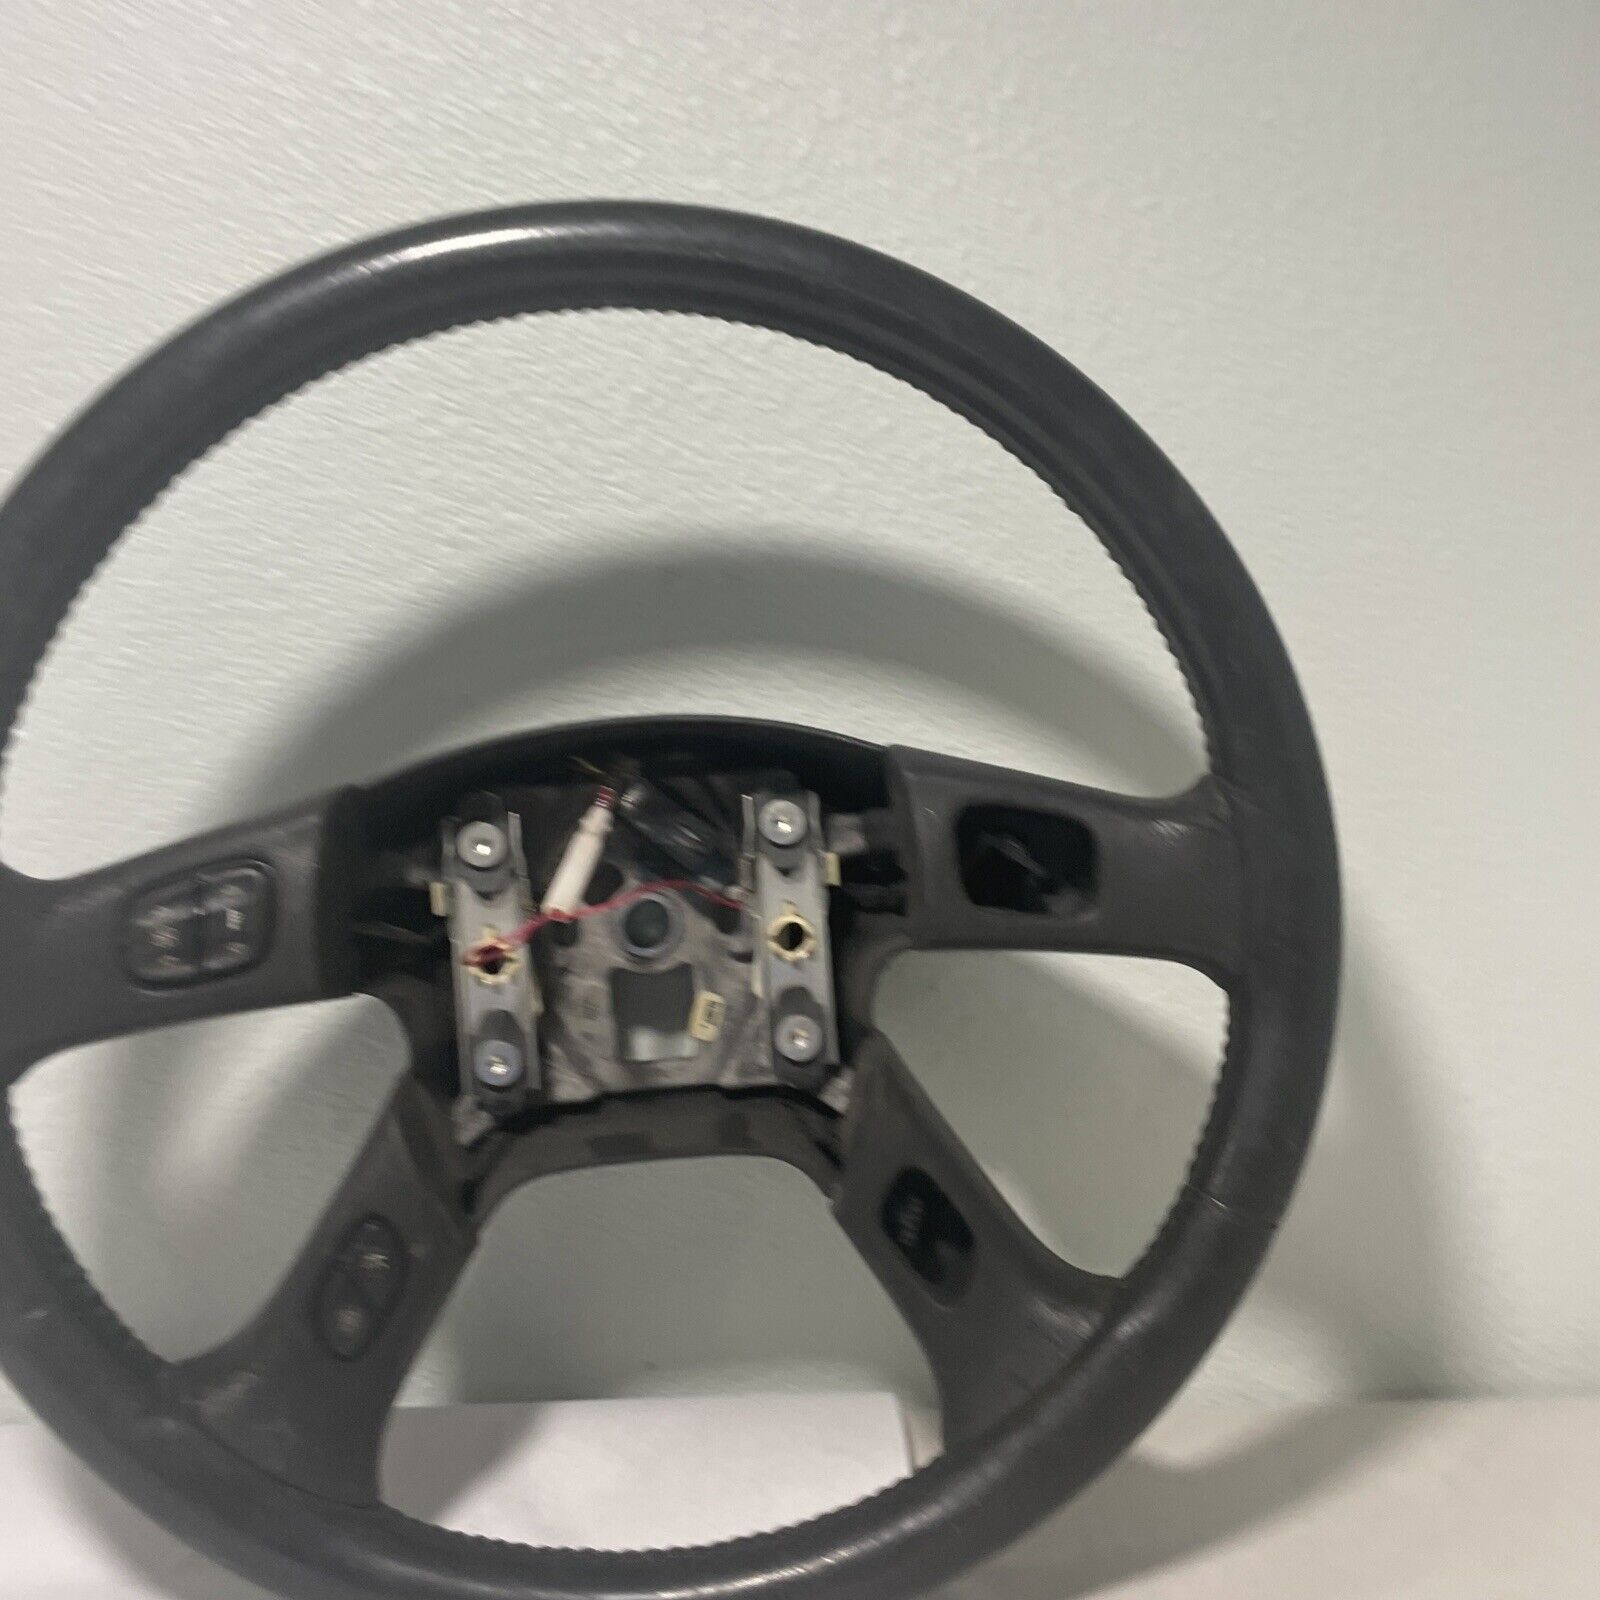 02-09 Chevy Trailblazer Steering Wheel OEM Black Leather Radio Envoy Rainier